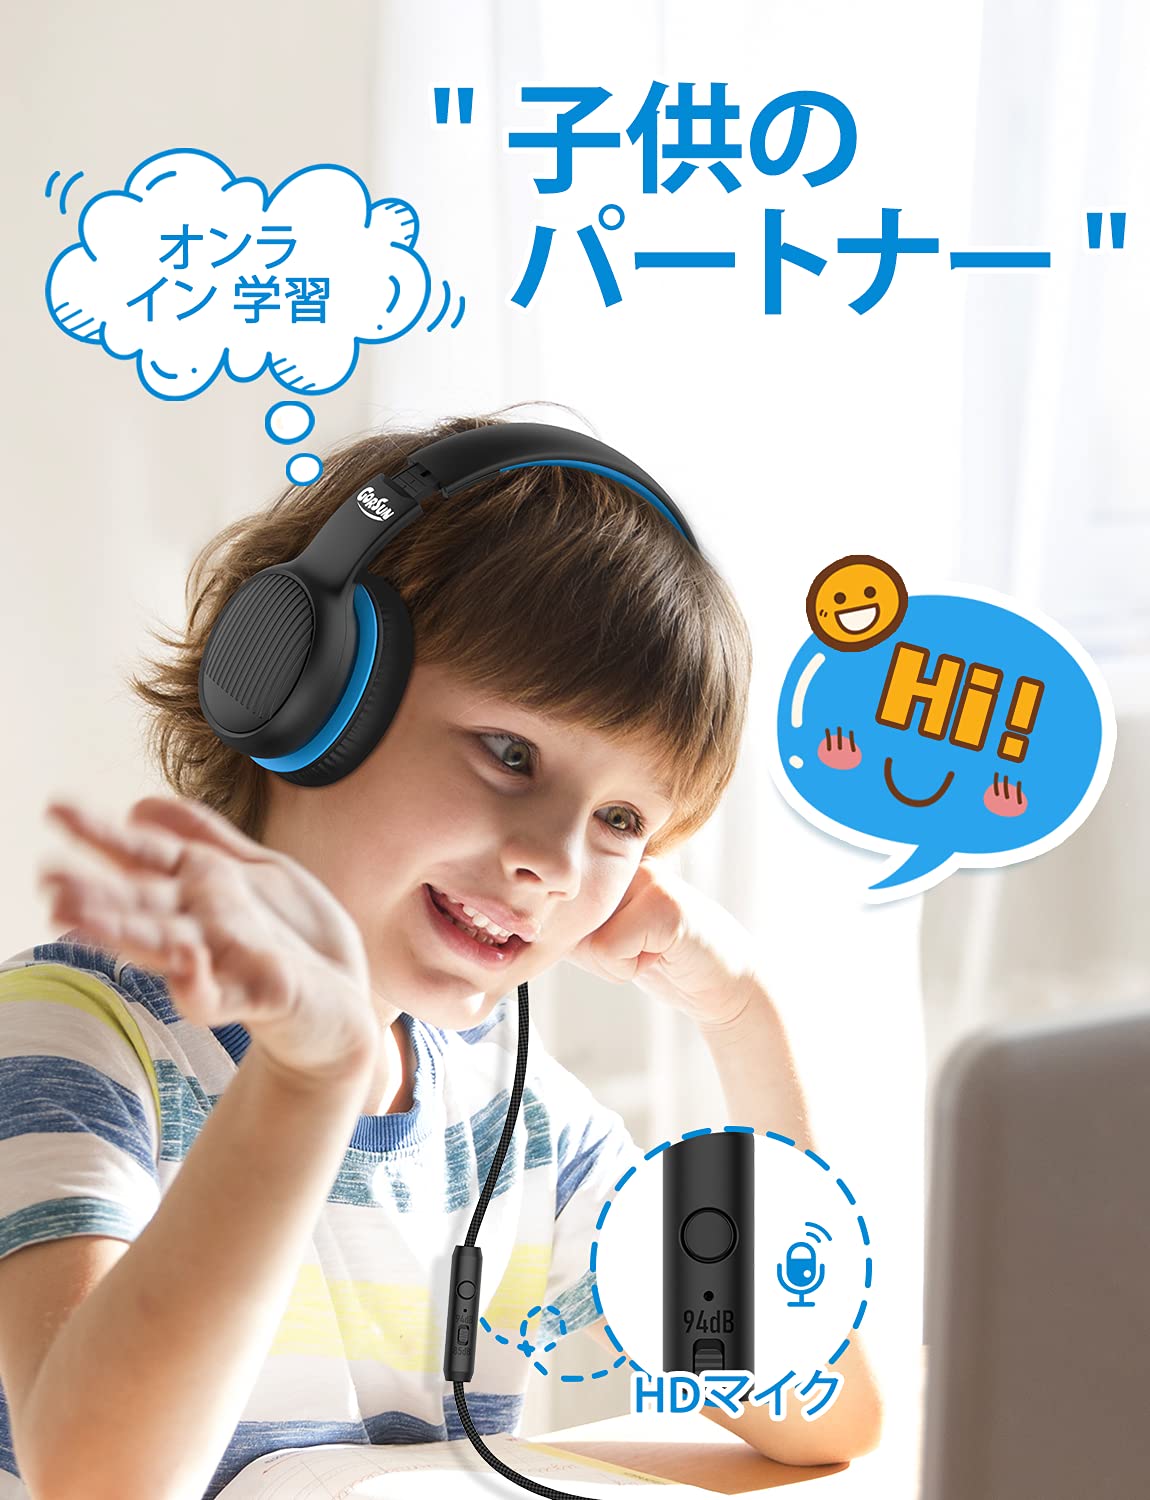 gorsun Premium A66 Kids Headphones with 85dB/94dB Volume Limited, in-line HD Mic, Audio Sharing, Foldable Toddler Headphones, Adjustable, Children Headphones Over-Ear for School Travel, Blue Black